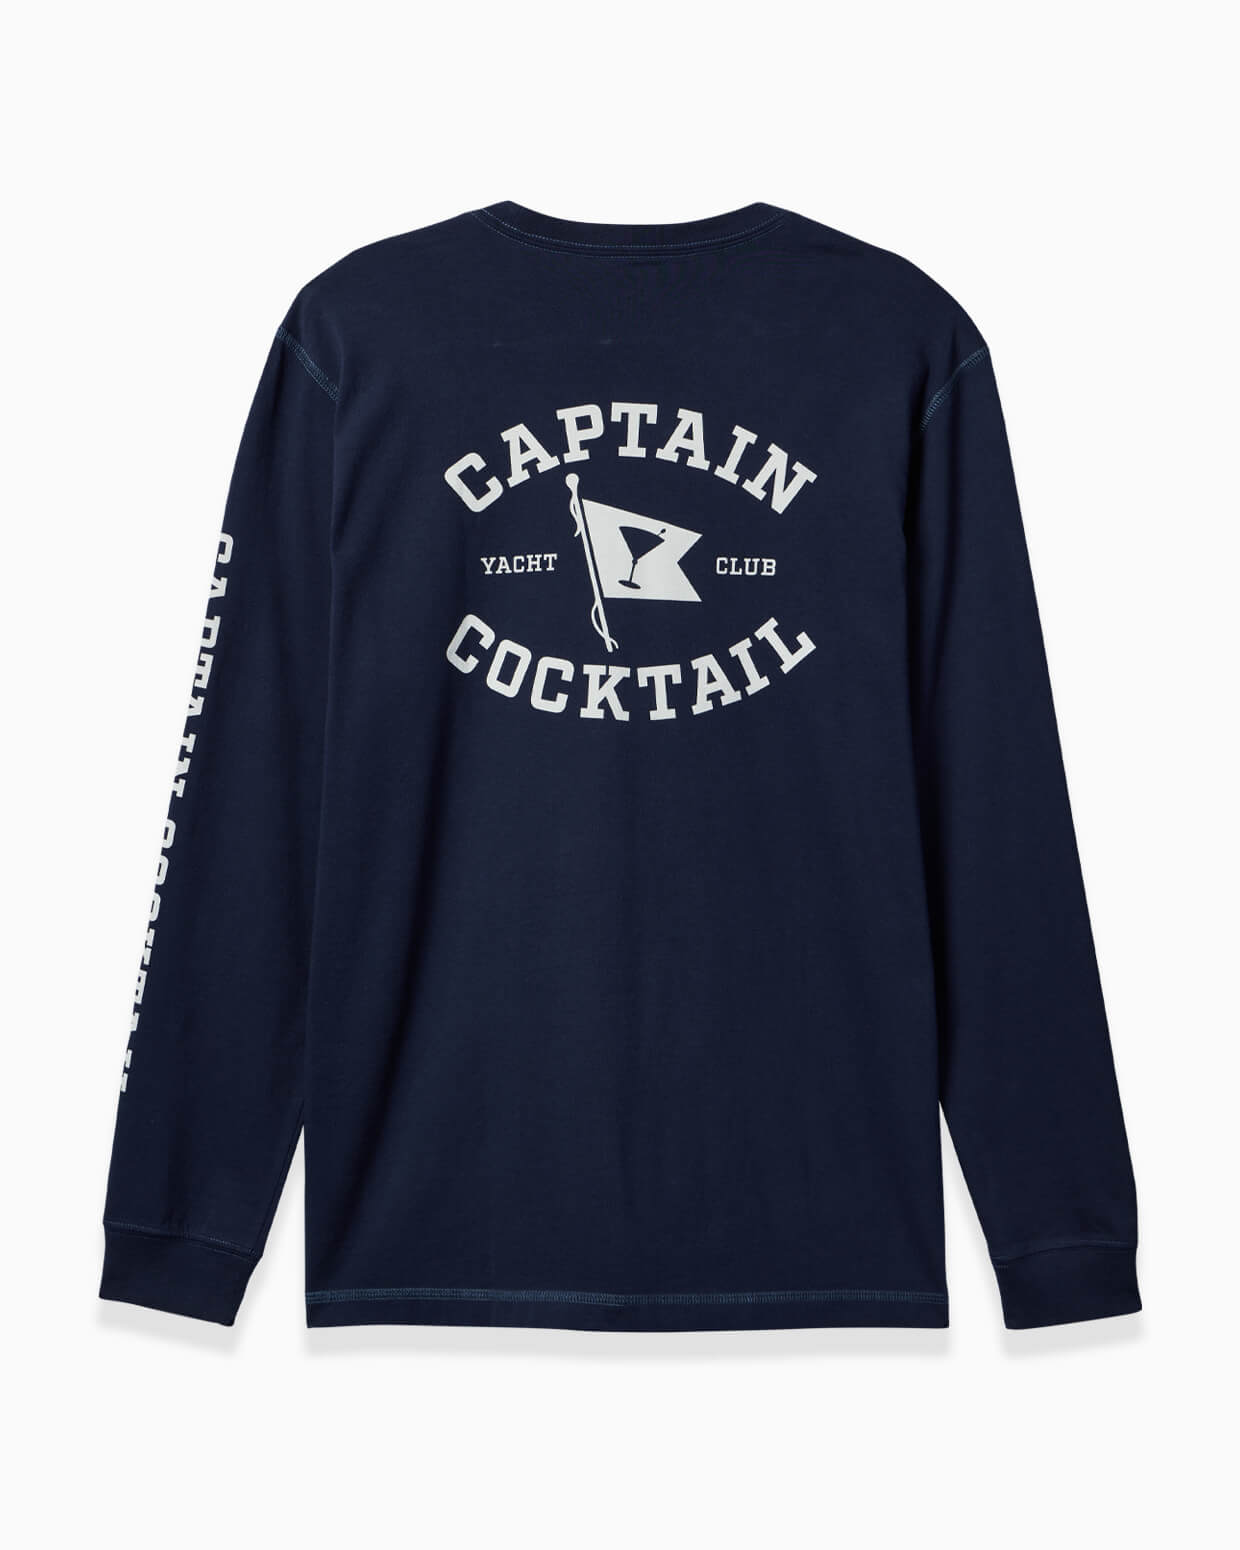 Vintage Surf Print Shirt - Captain Cocktail Tee